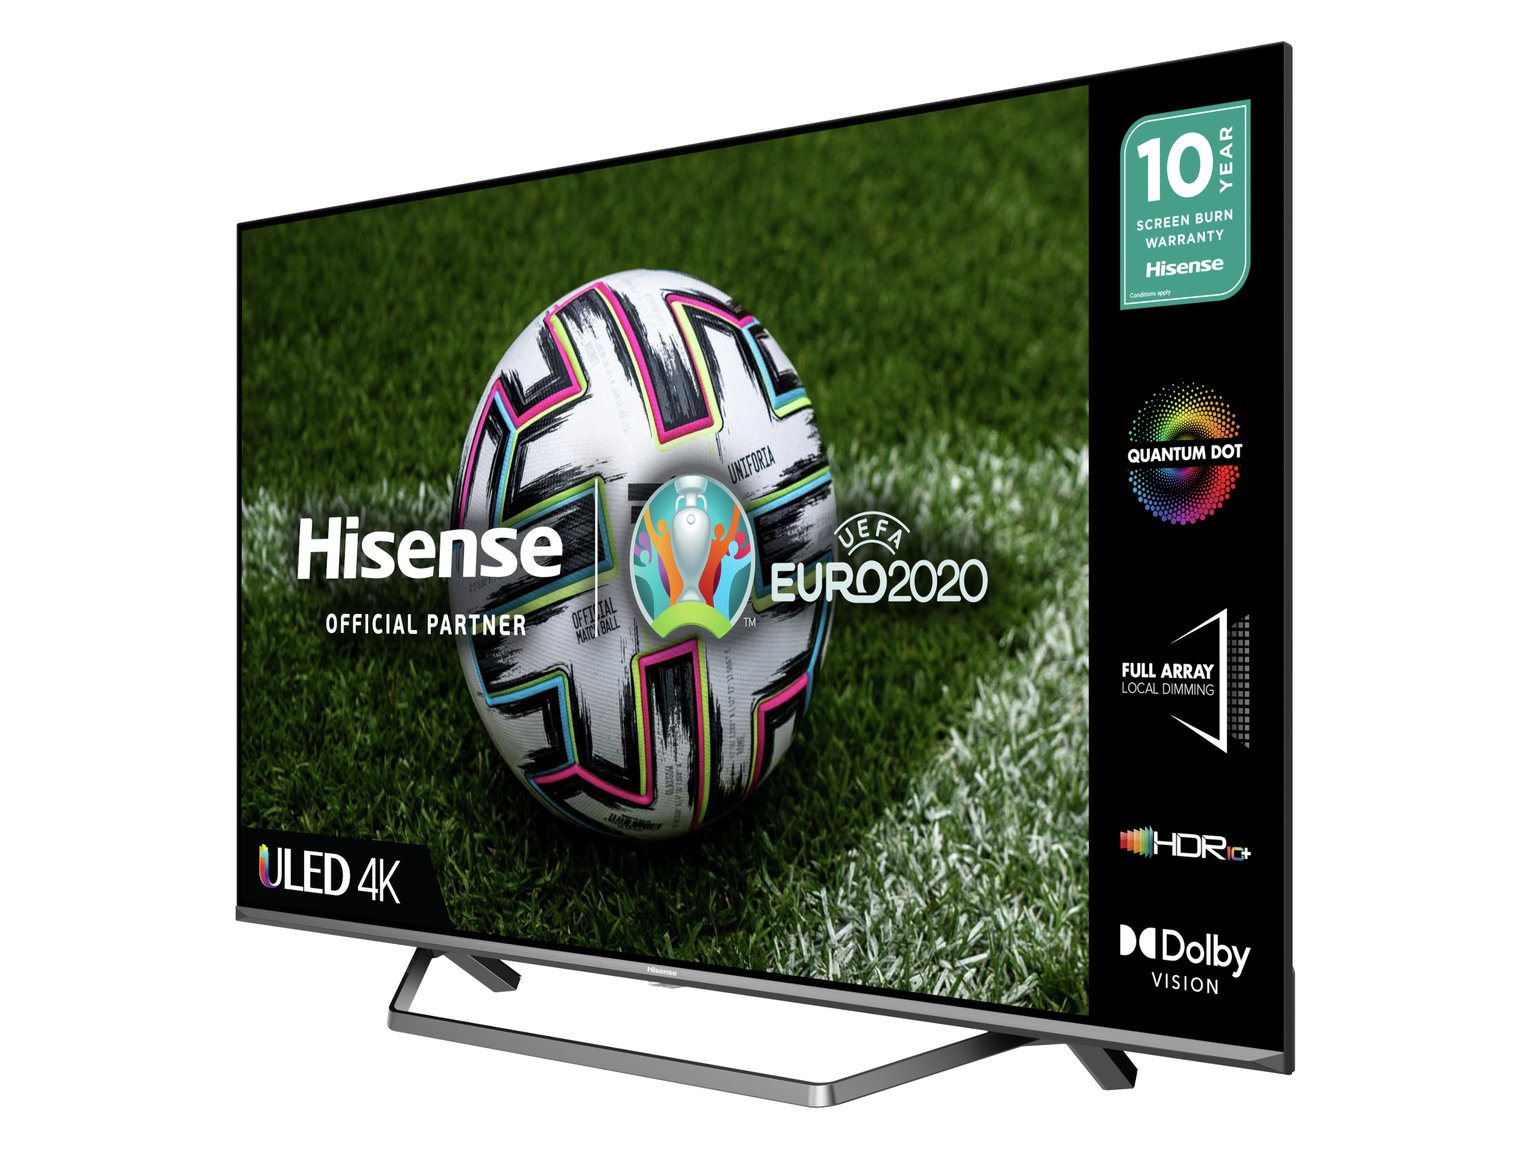 Hisense 55U7QFTUK 55 Inch Smart 4K Ultra HD QLED TV with HDR Review